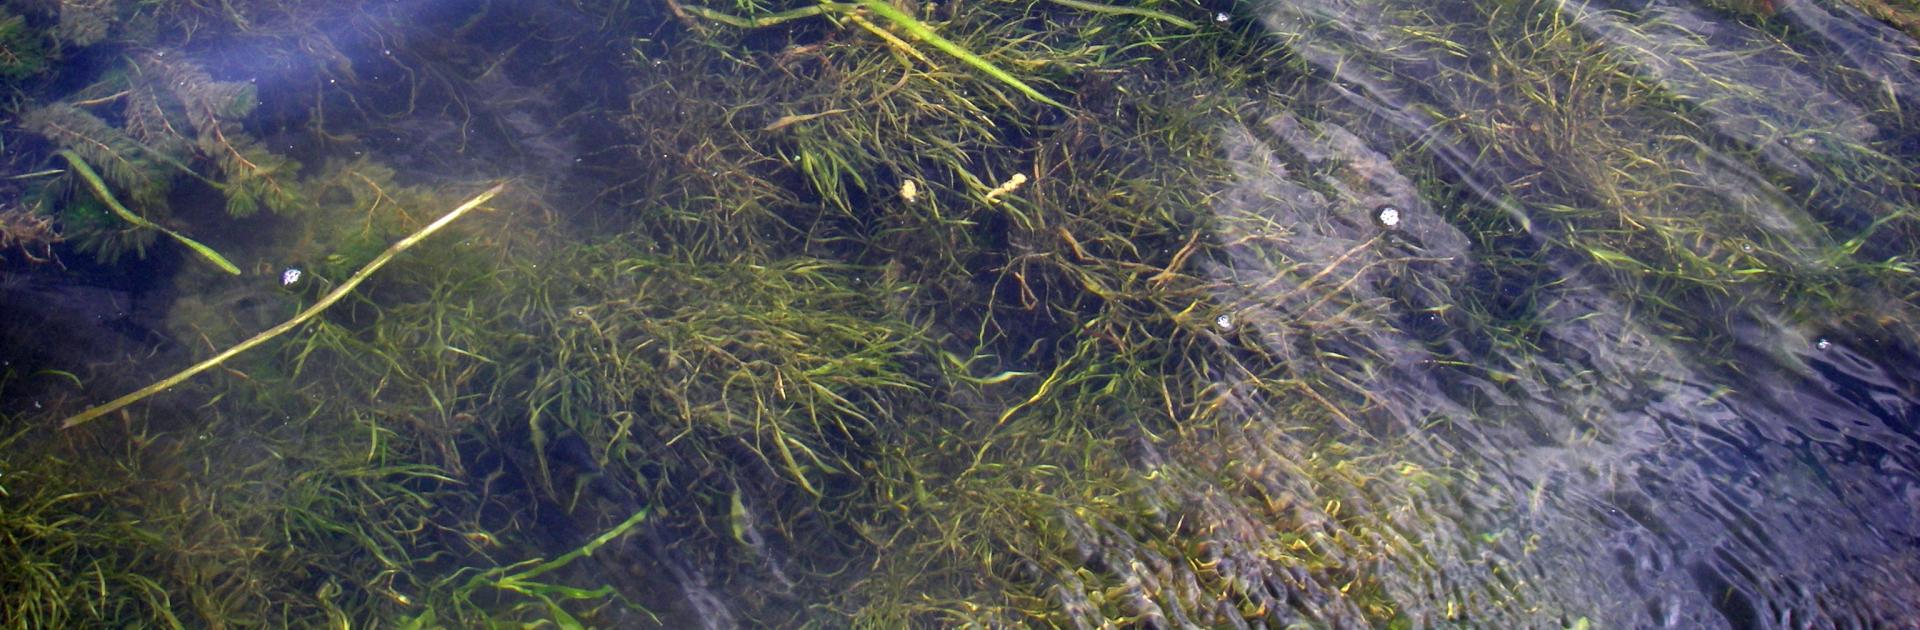 seagrass in Chesapeake